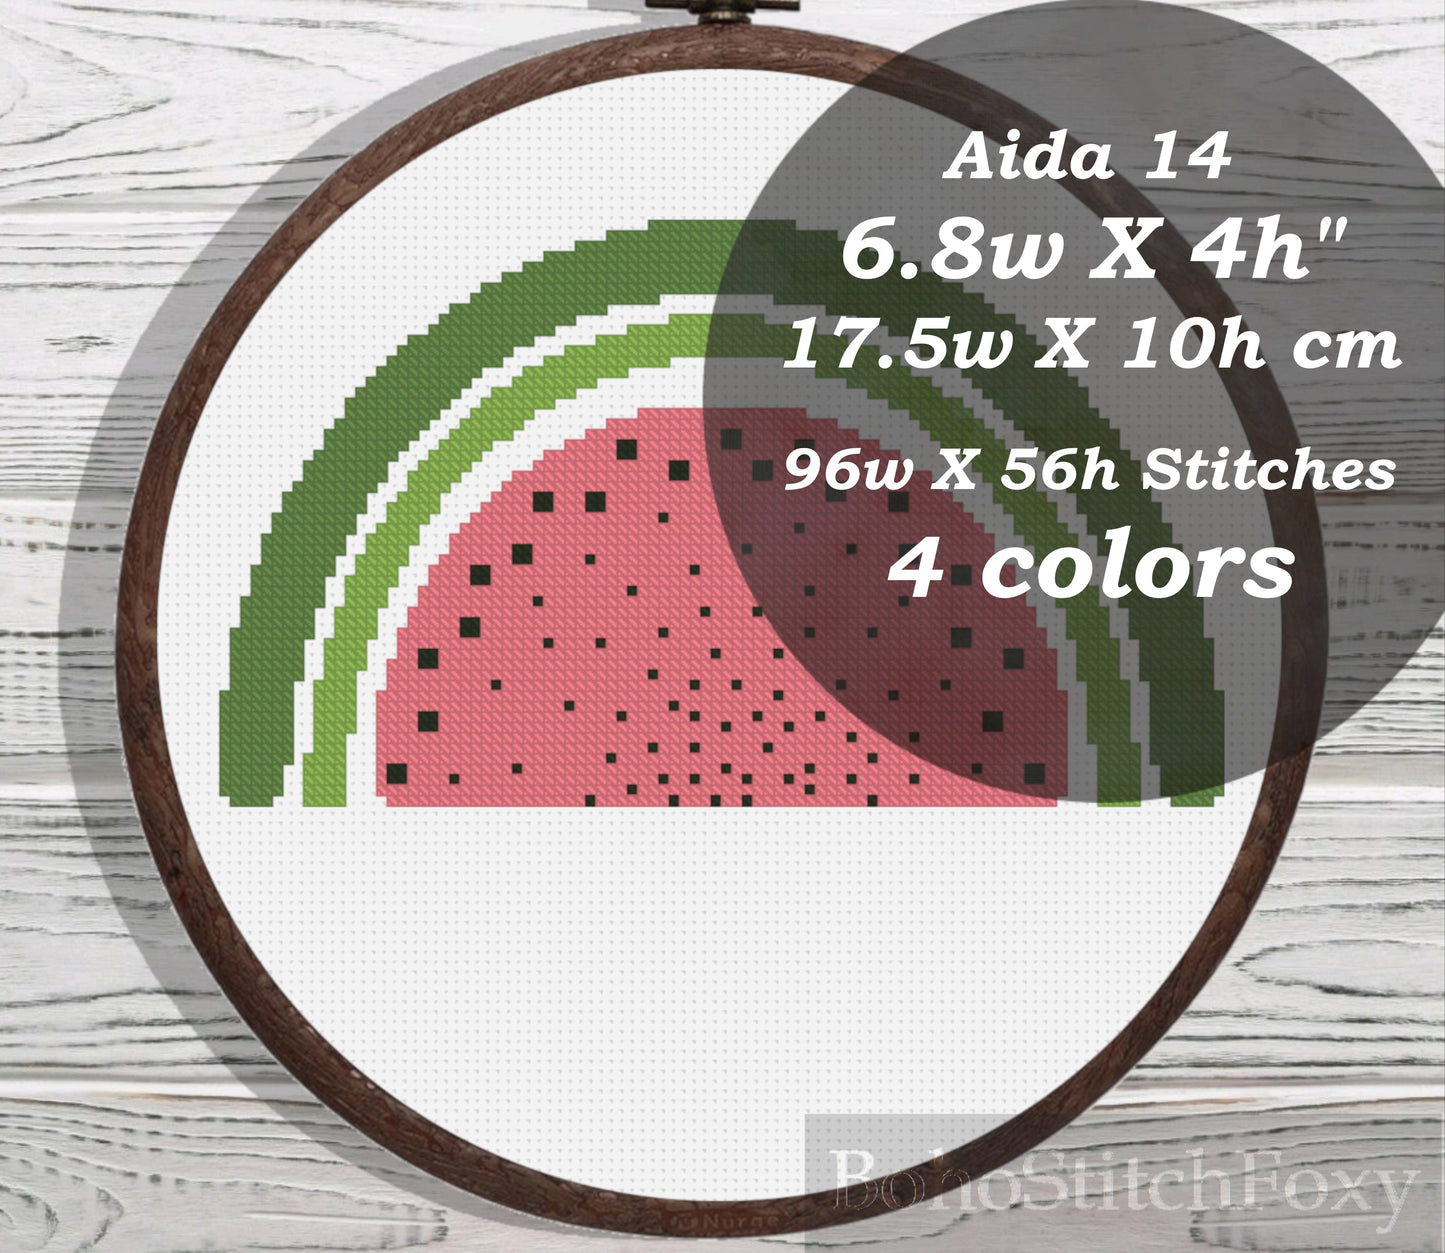 Watermelon rainbow cross stitch pattern